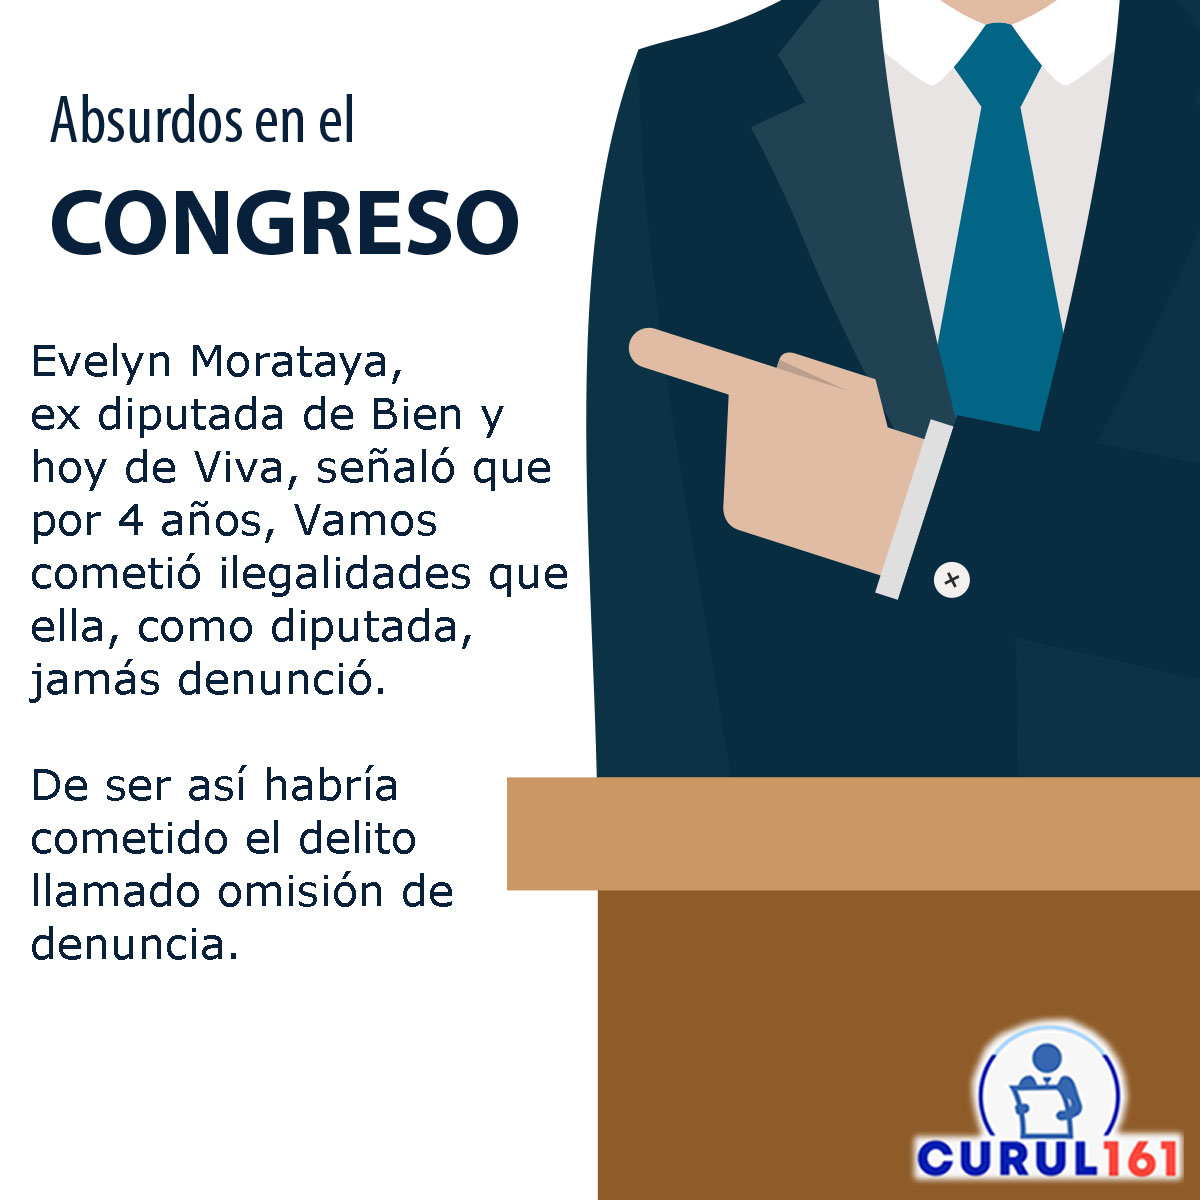 #AbsurdosEnElCongreso #CongresoGuatemala